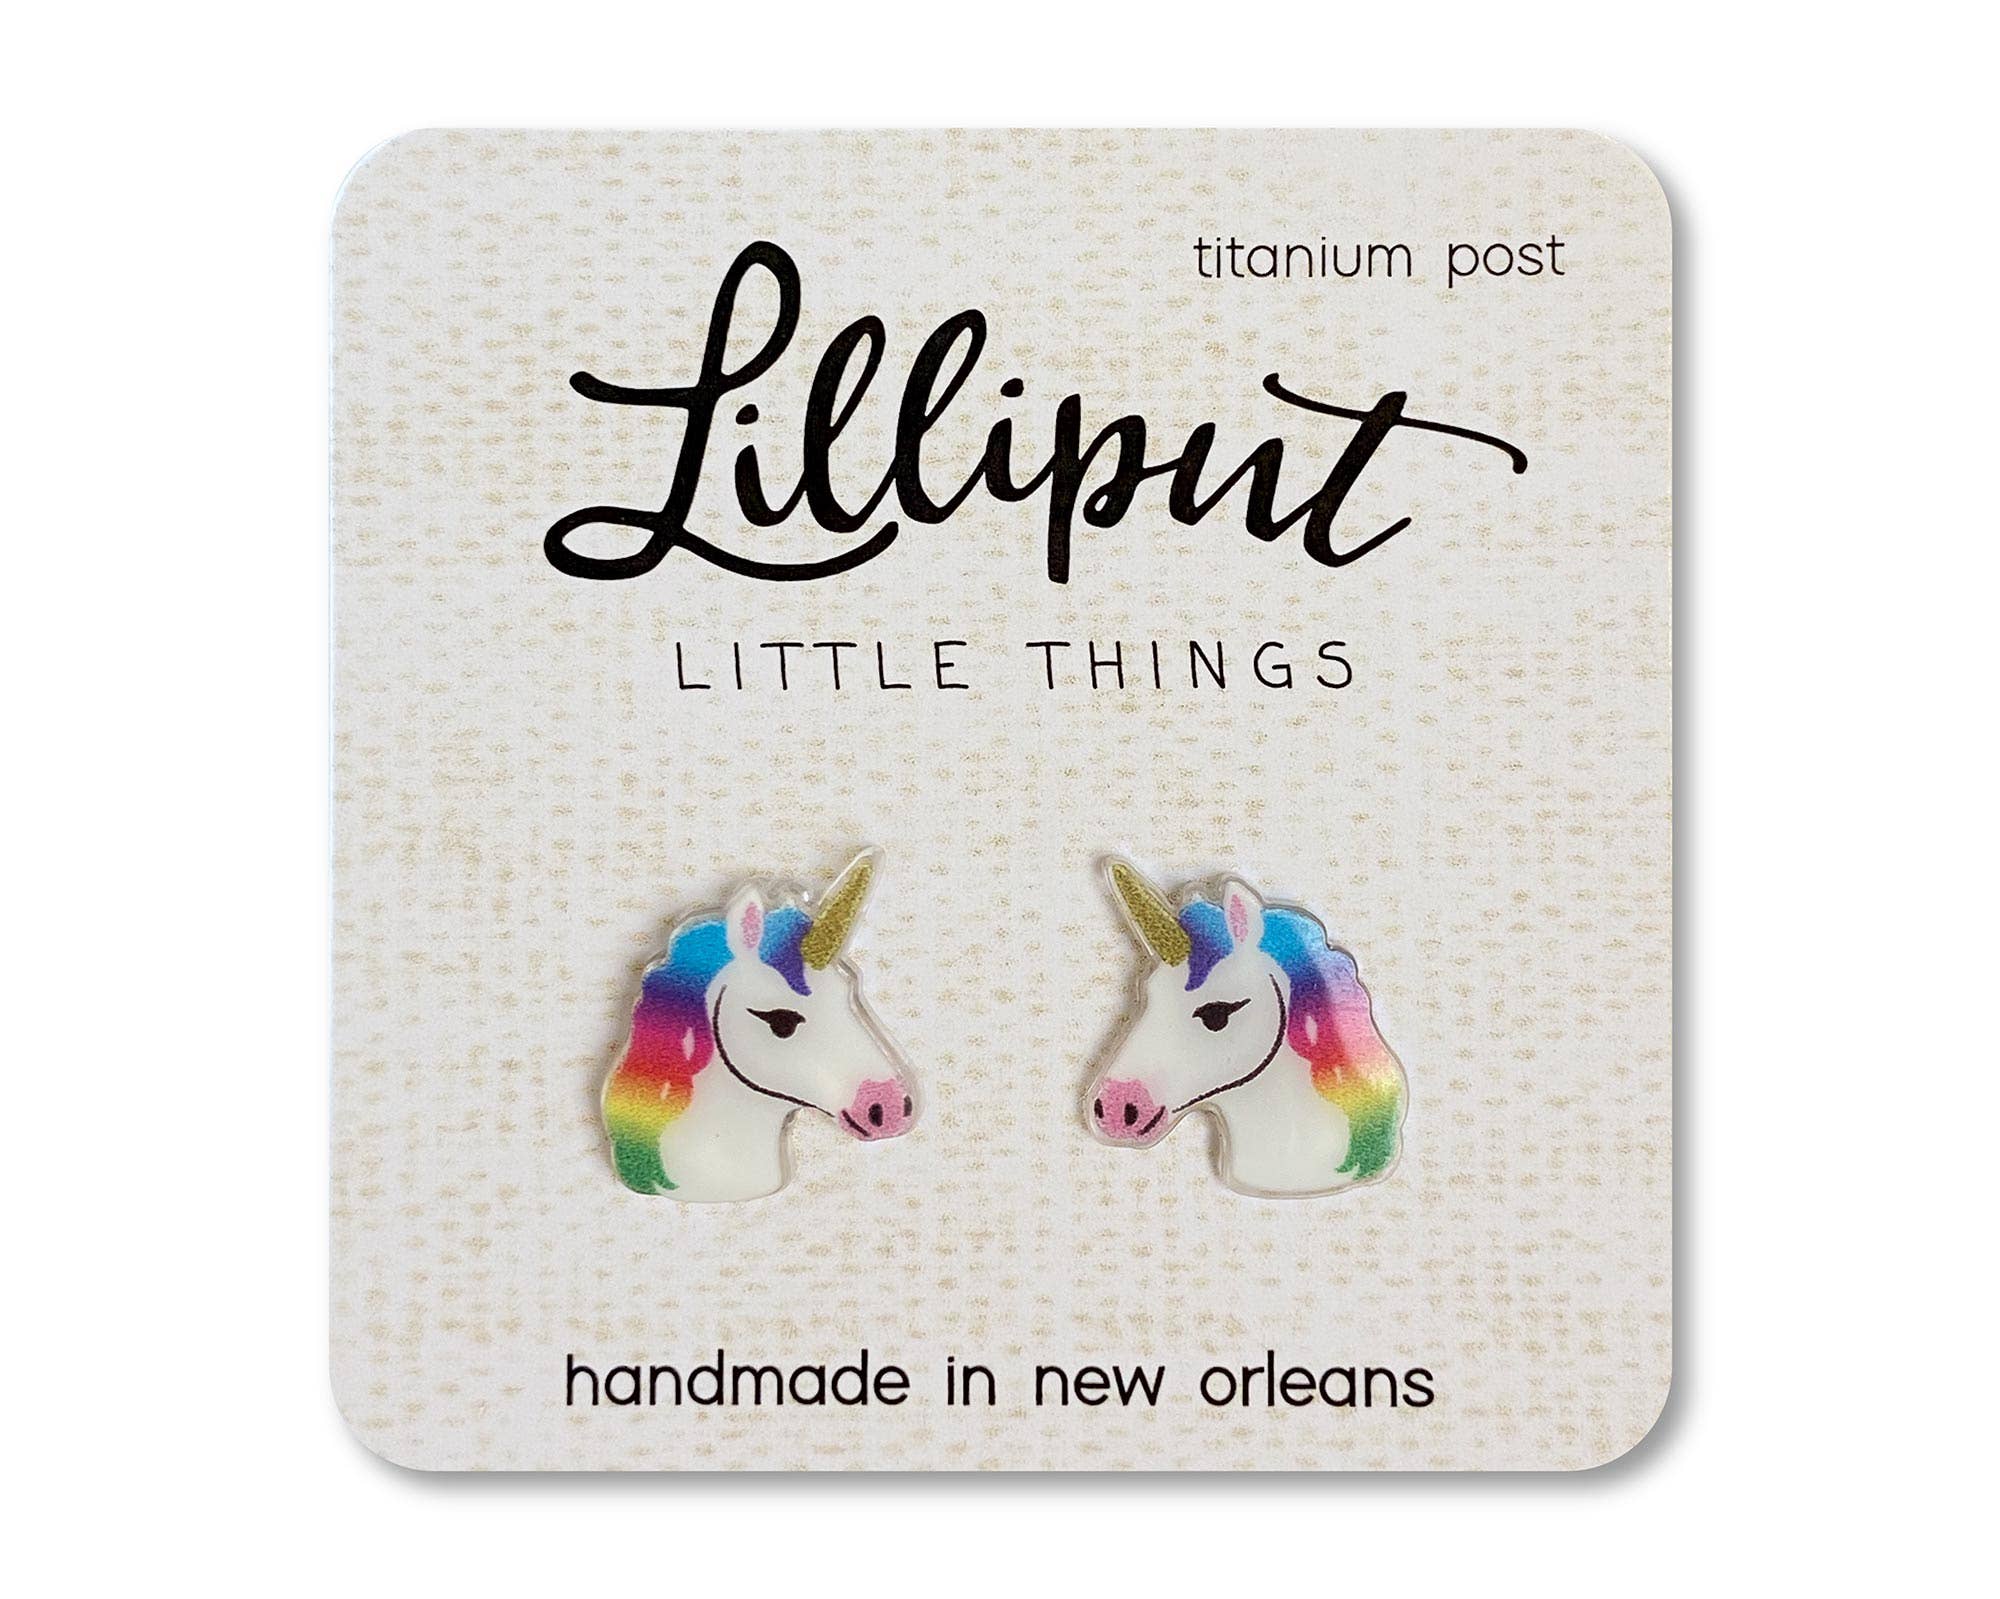 Lilliput Little Things - NEW Rainbow Unicorn Earrings